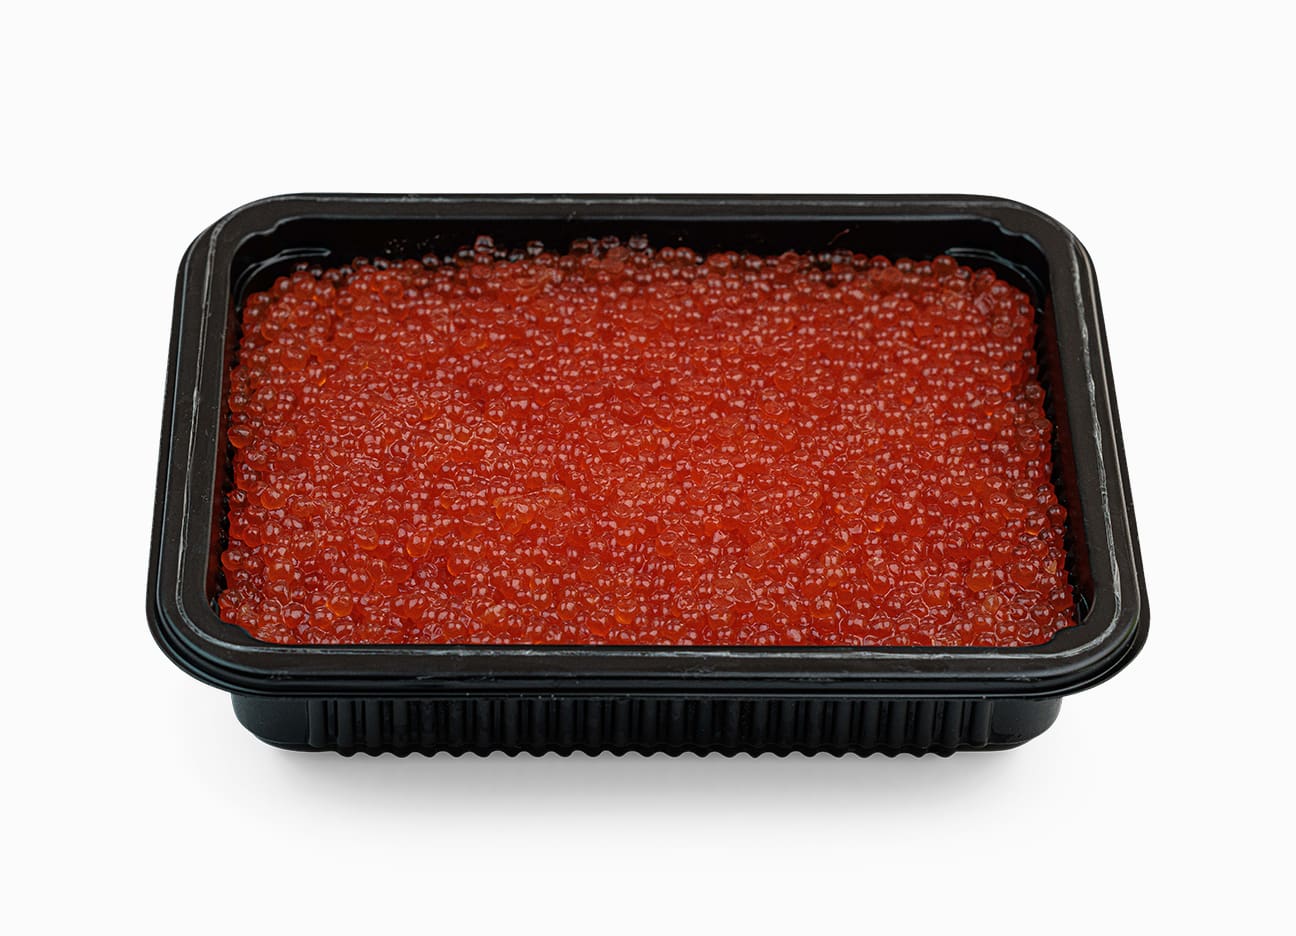 Wild Alaskan Salmon Red Caviar Peter Pan Grade 3 35.2 oz in an open package.